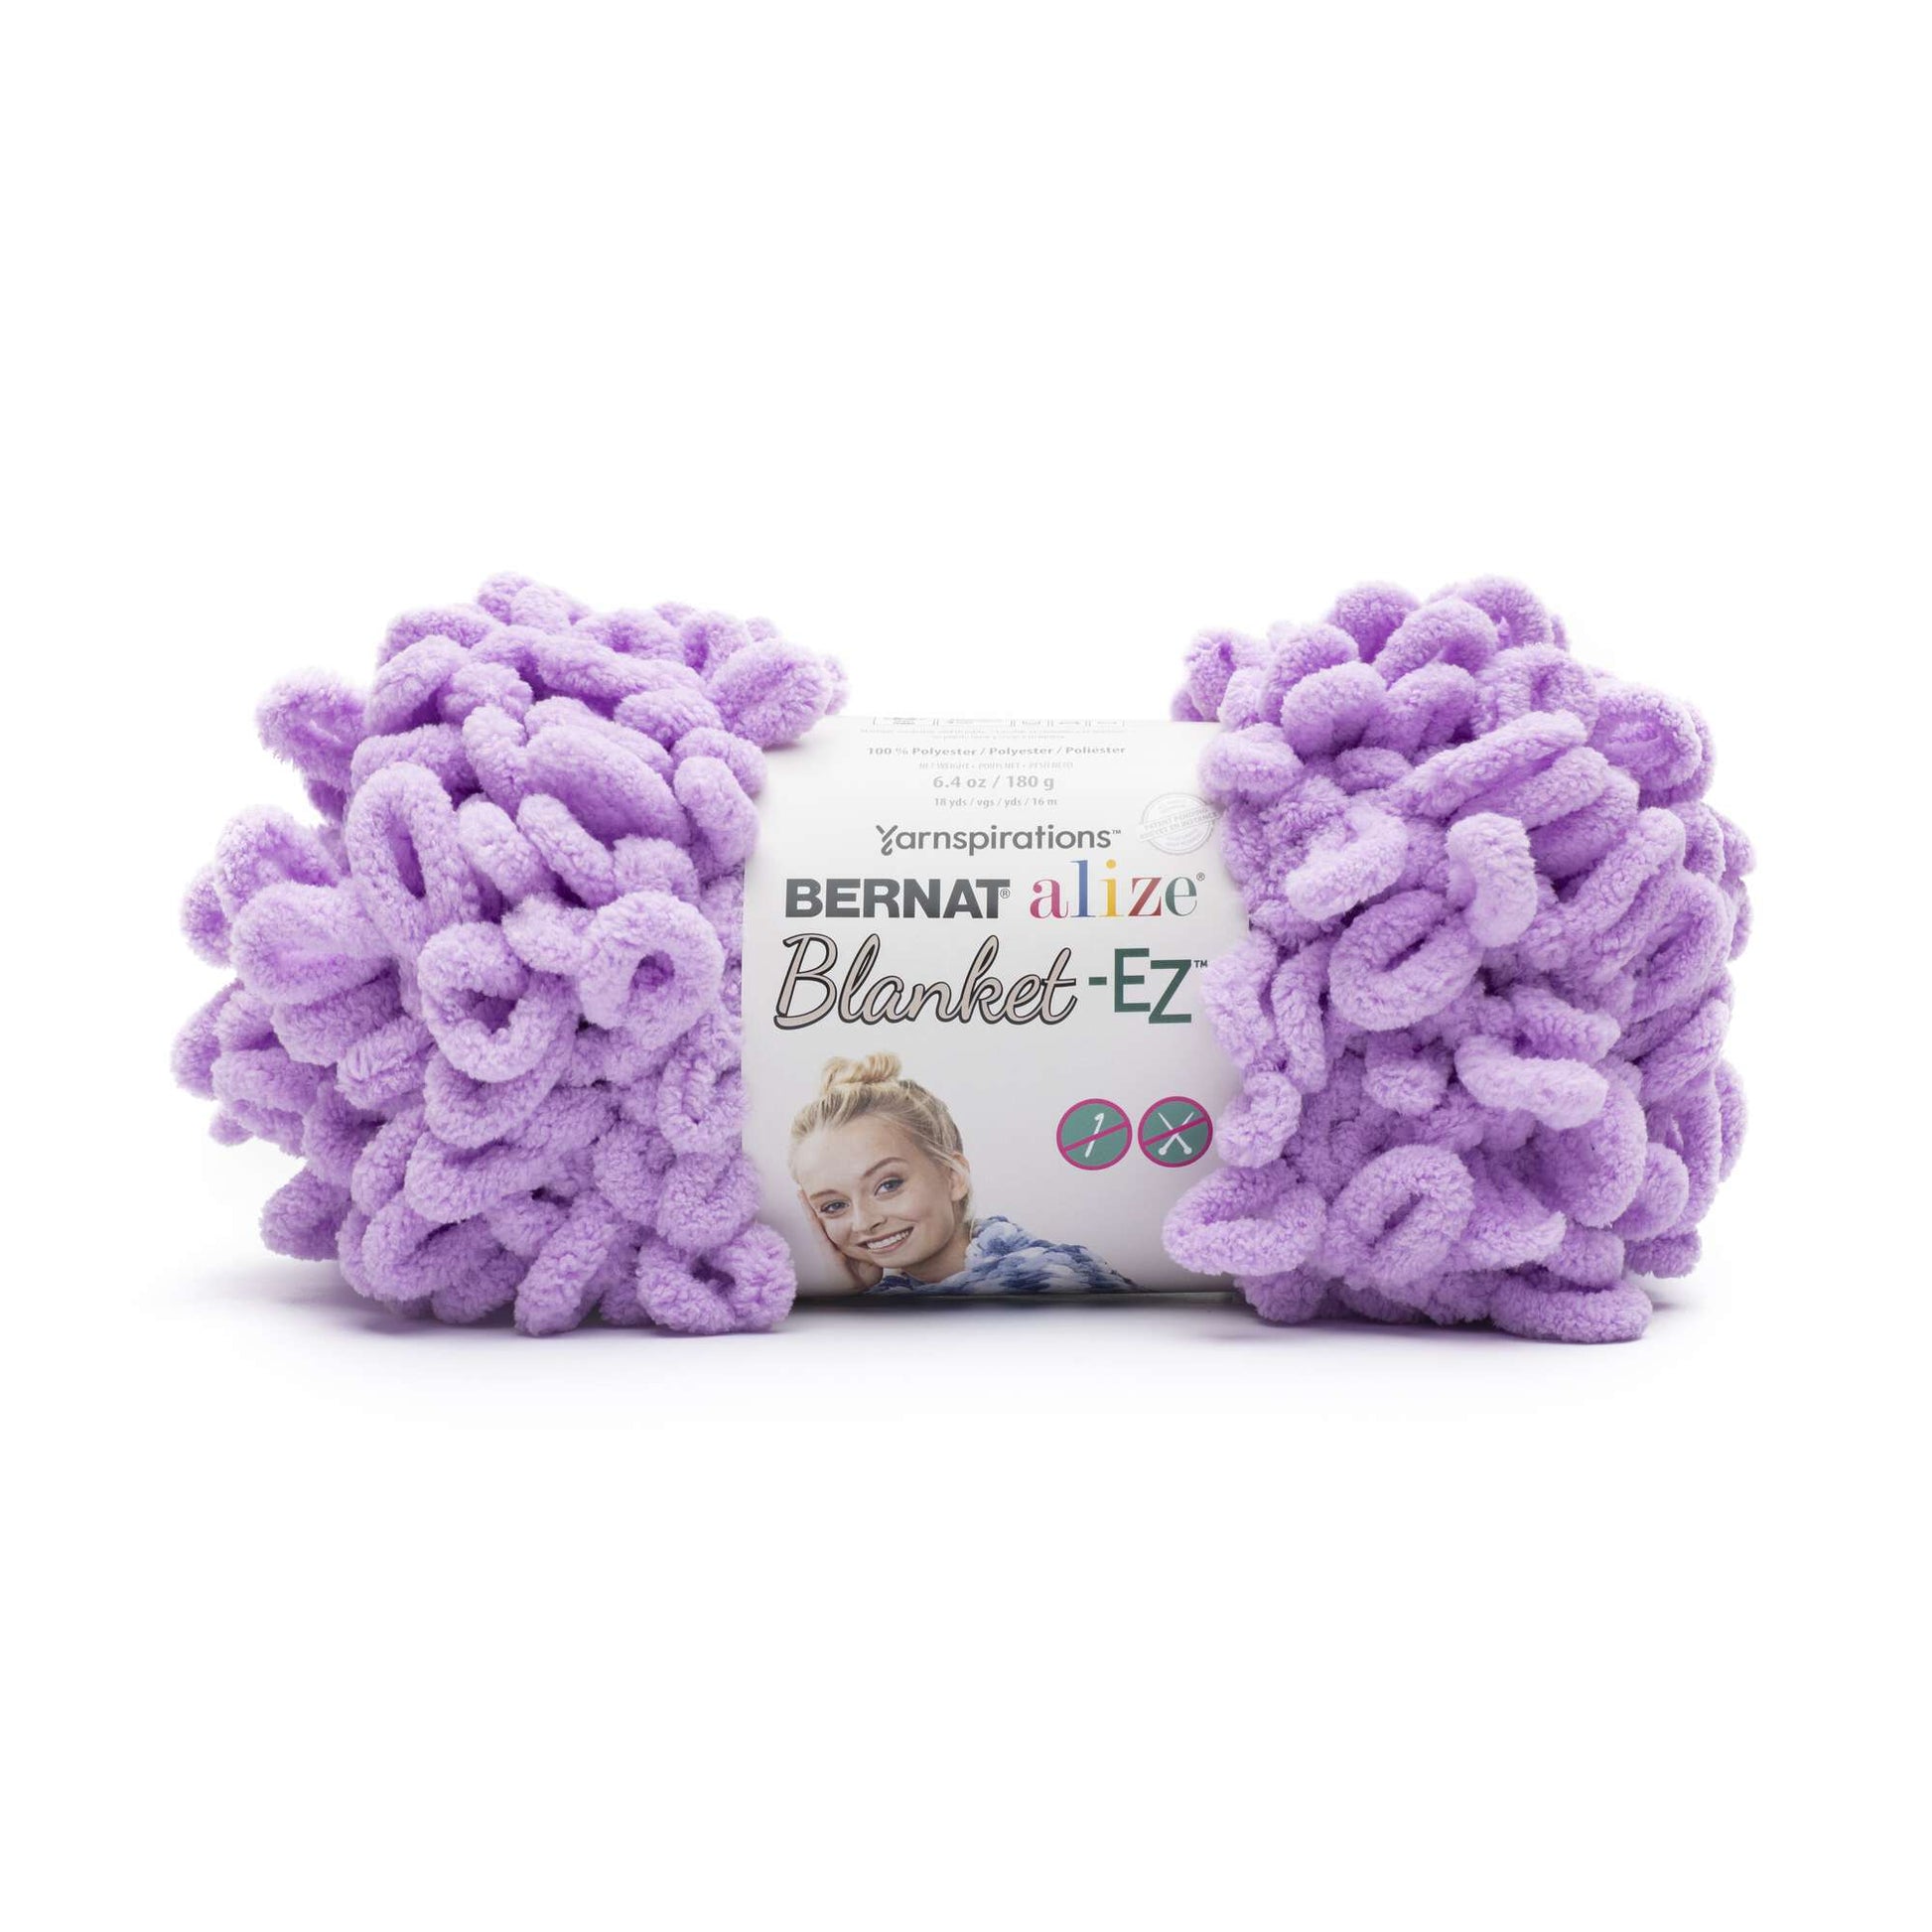 Bernat Alize Blanket-EZ Yarn - Clearance Shades